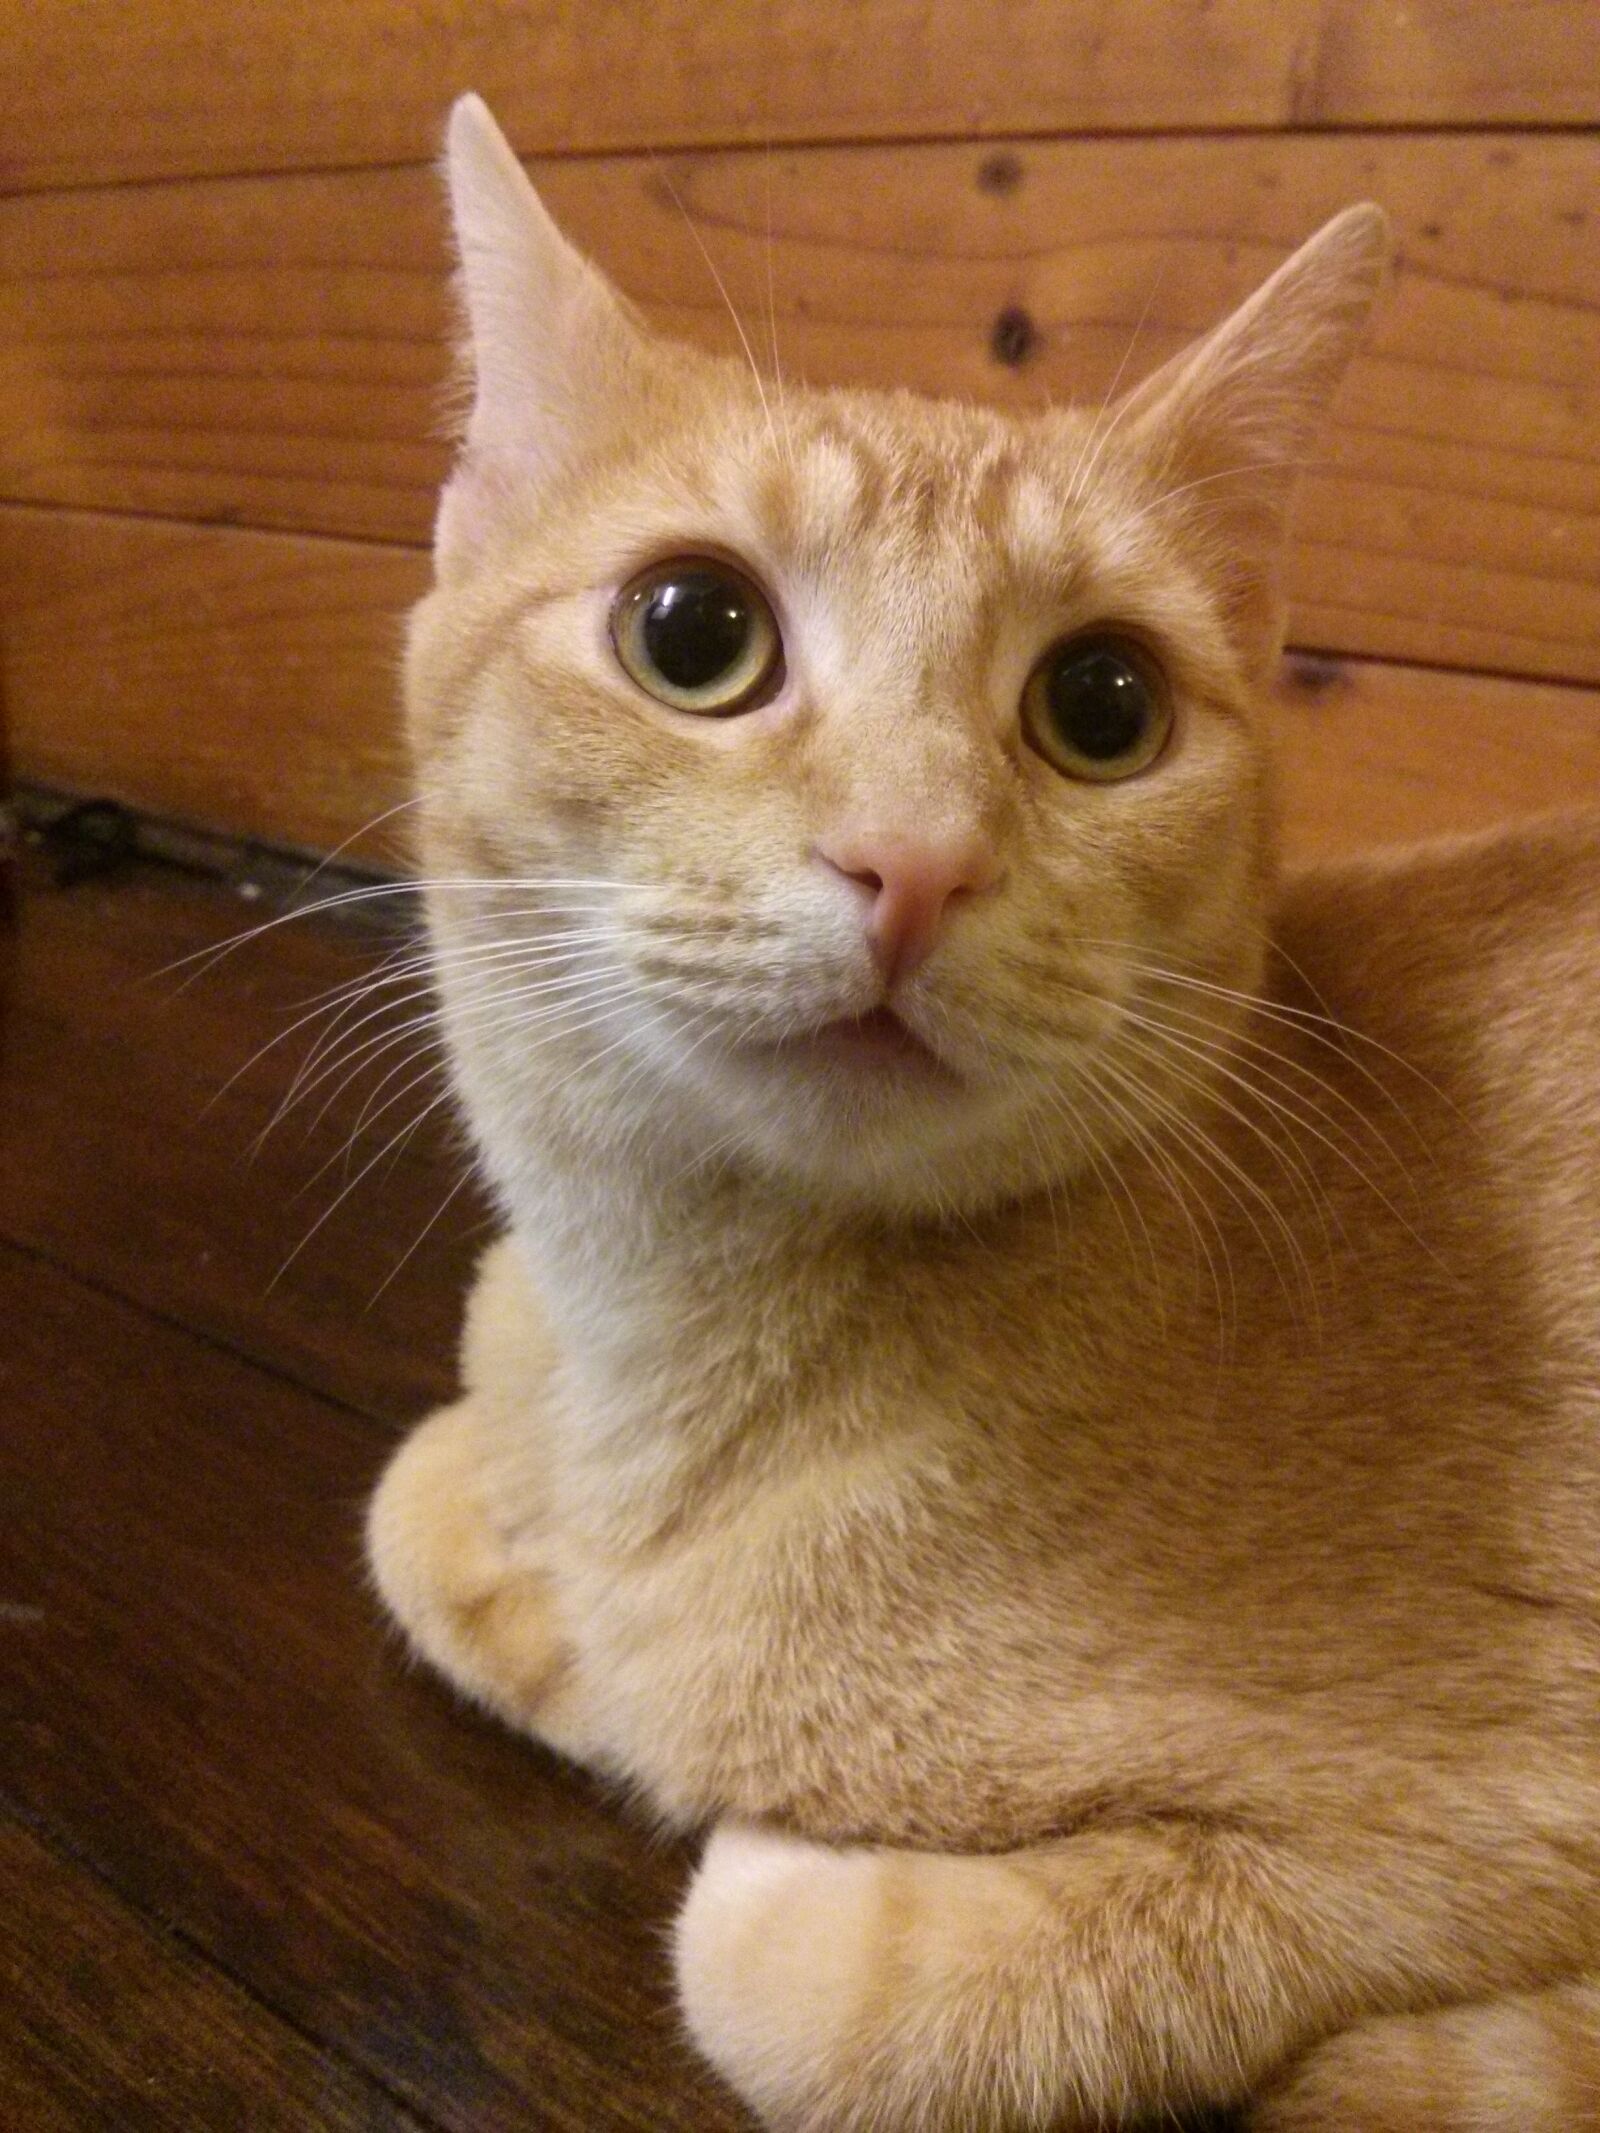 LG Nexus 4 sample photo. Cat, portrait, orange photography